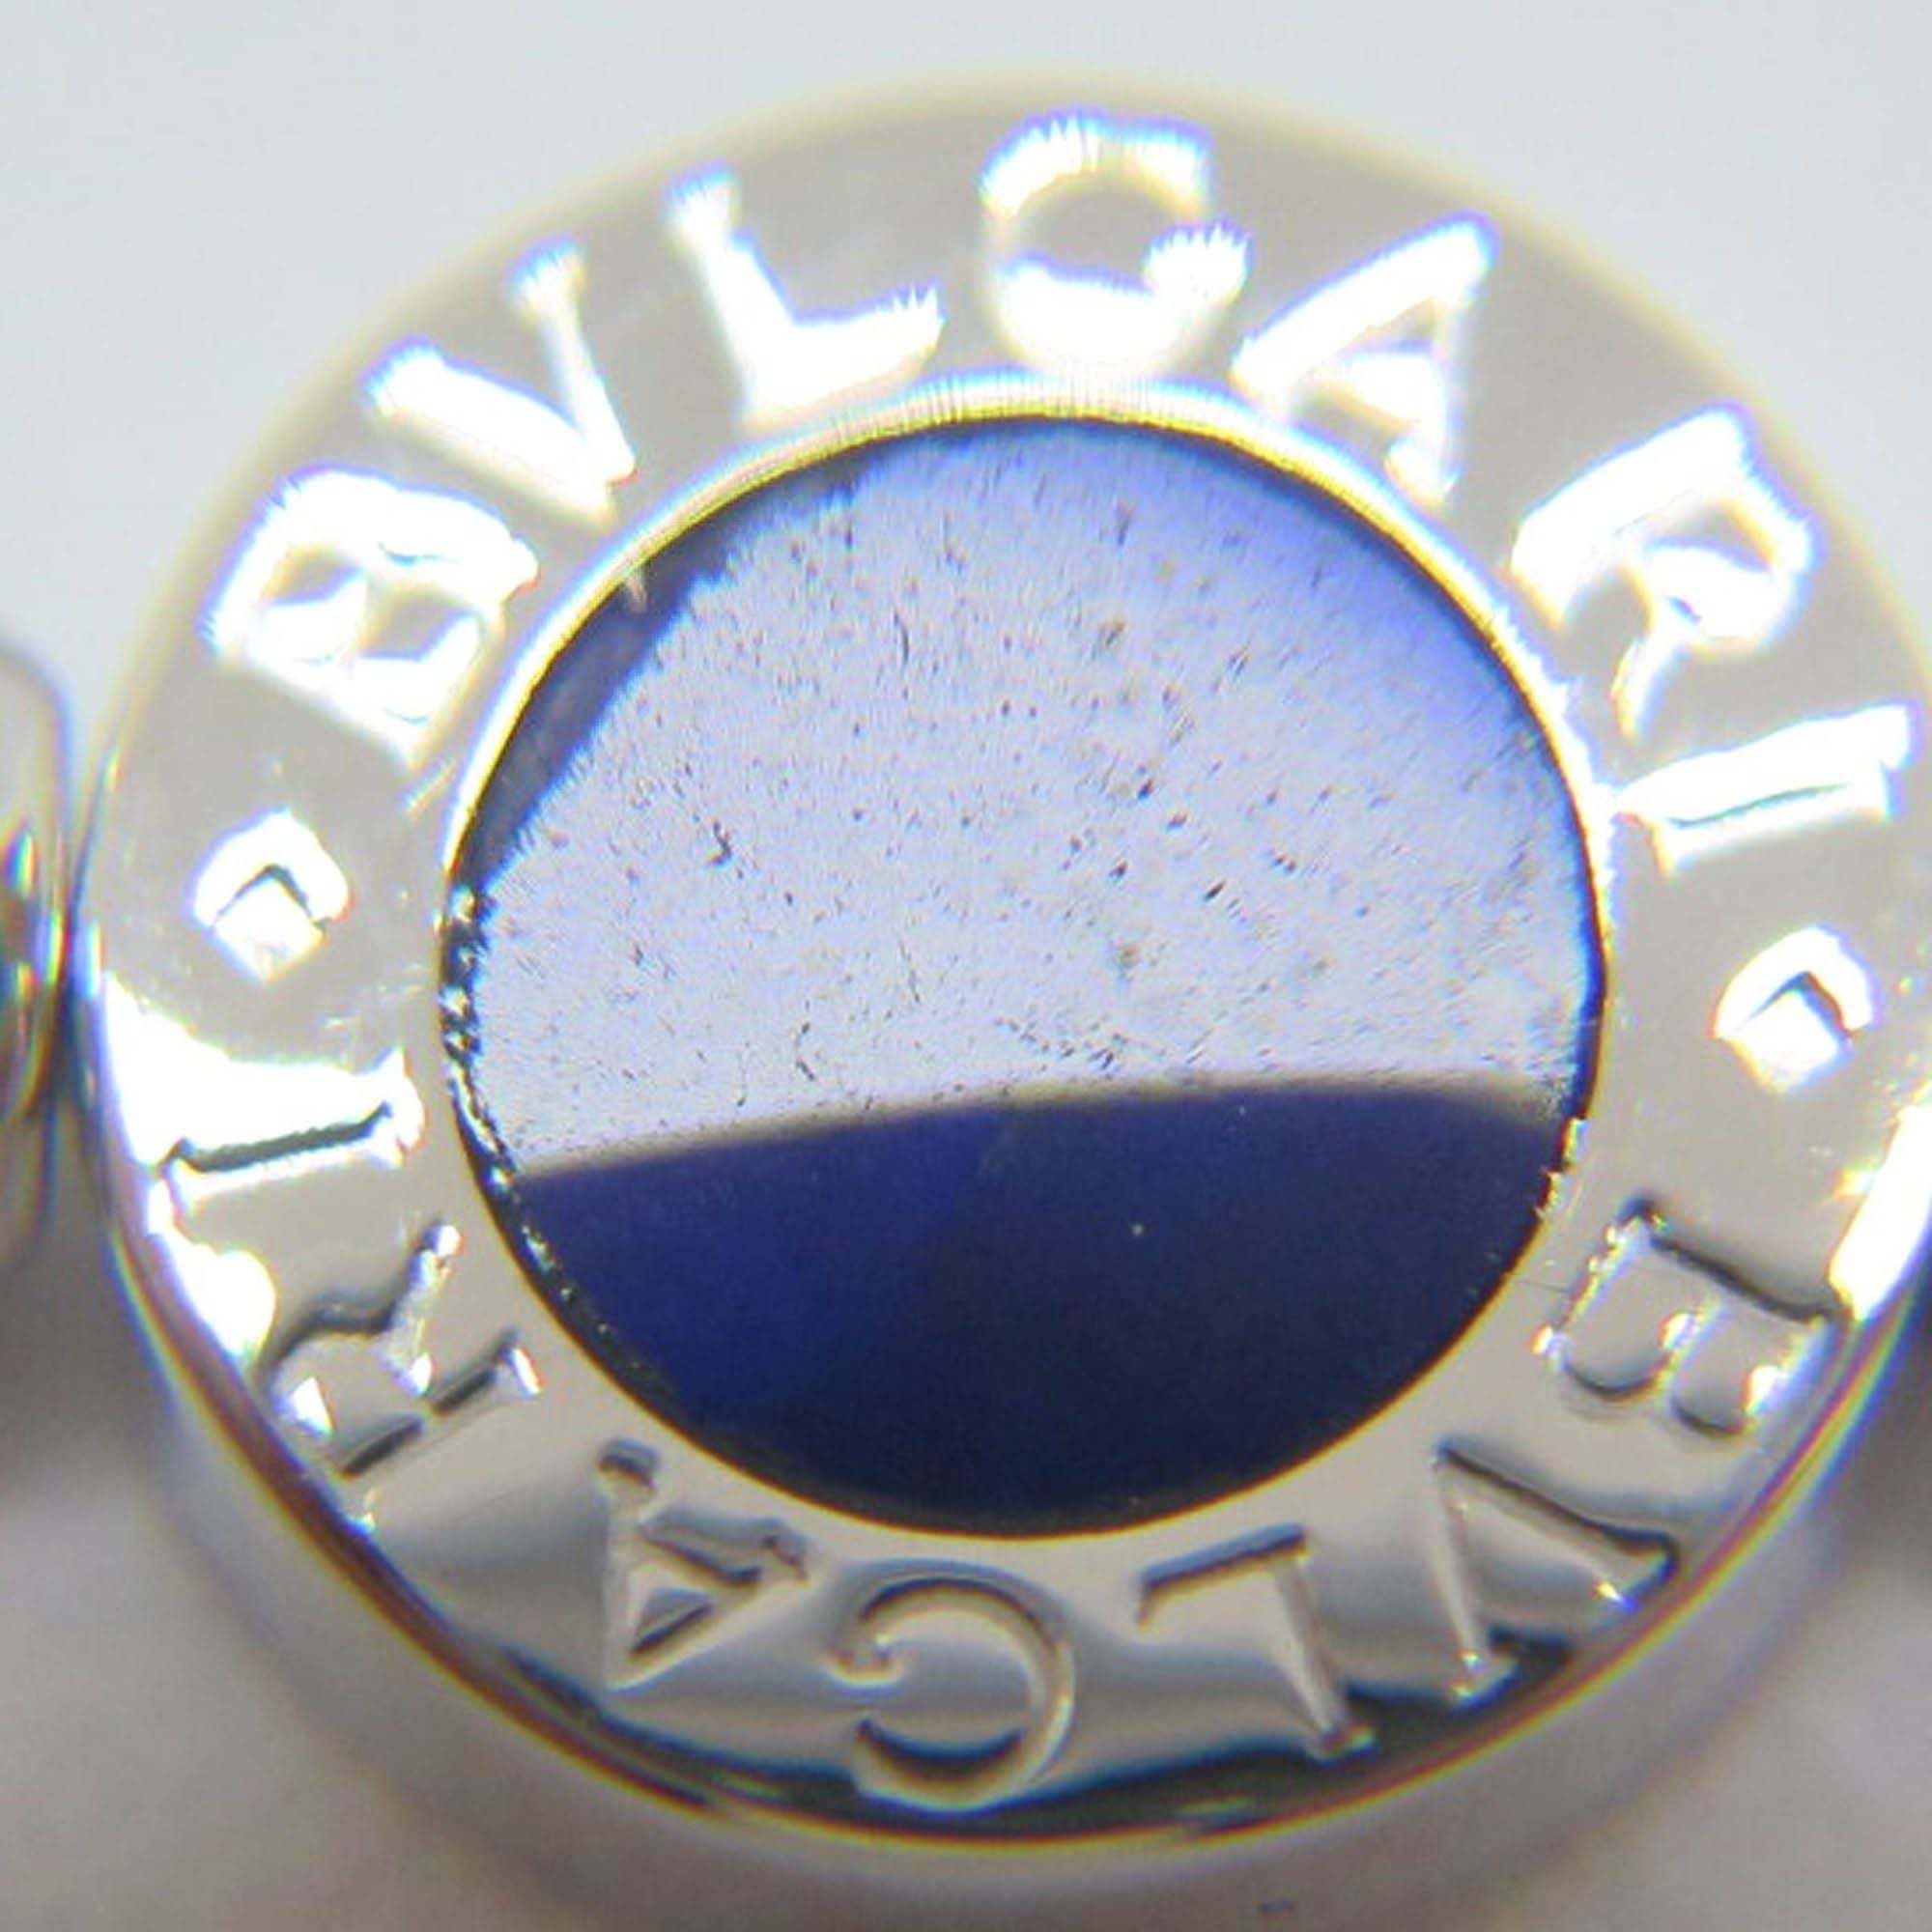 Bvlgari Flip 18K White Gold Diamond Lapis Lazuli Ring EU 52